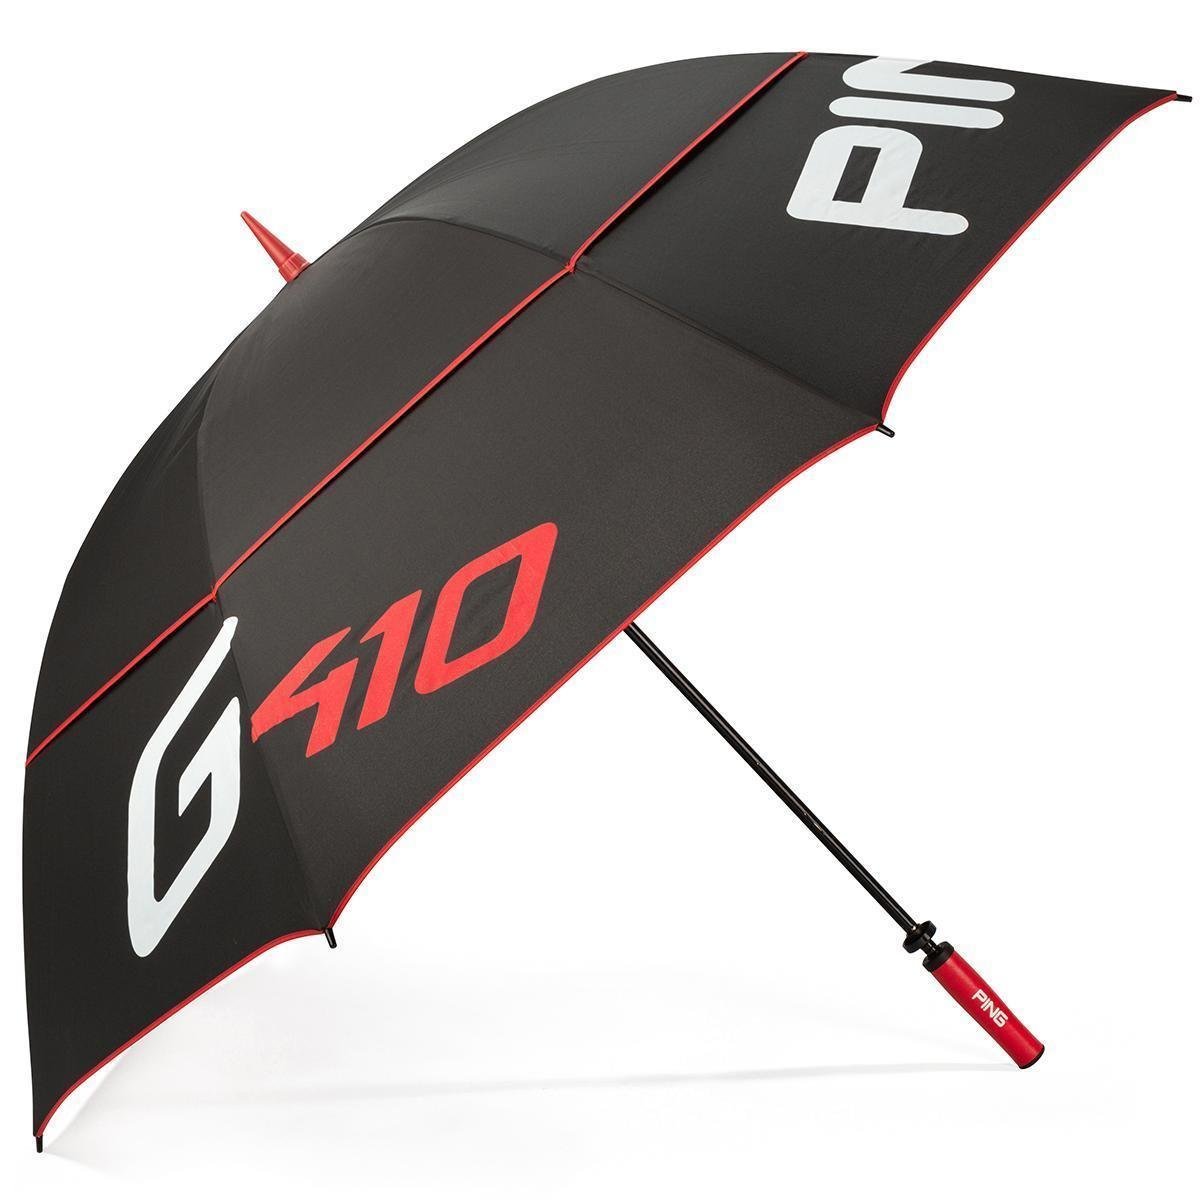 Guarda-chuva Ping G410 Double Canopy Umbrella Black/Scarlet/White